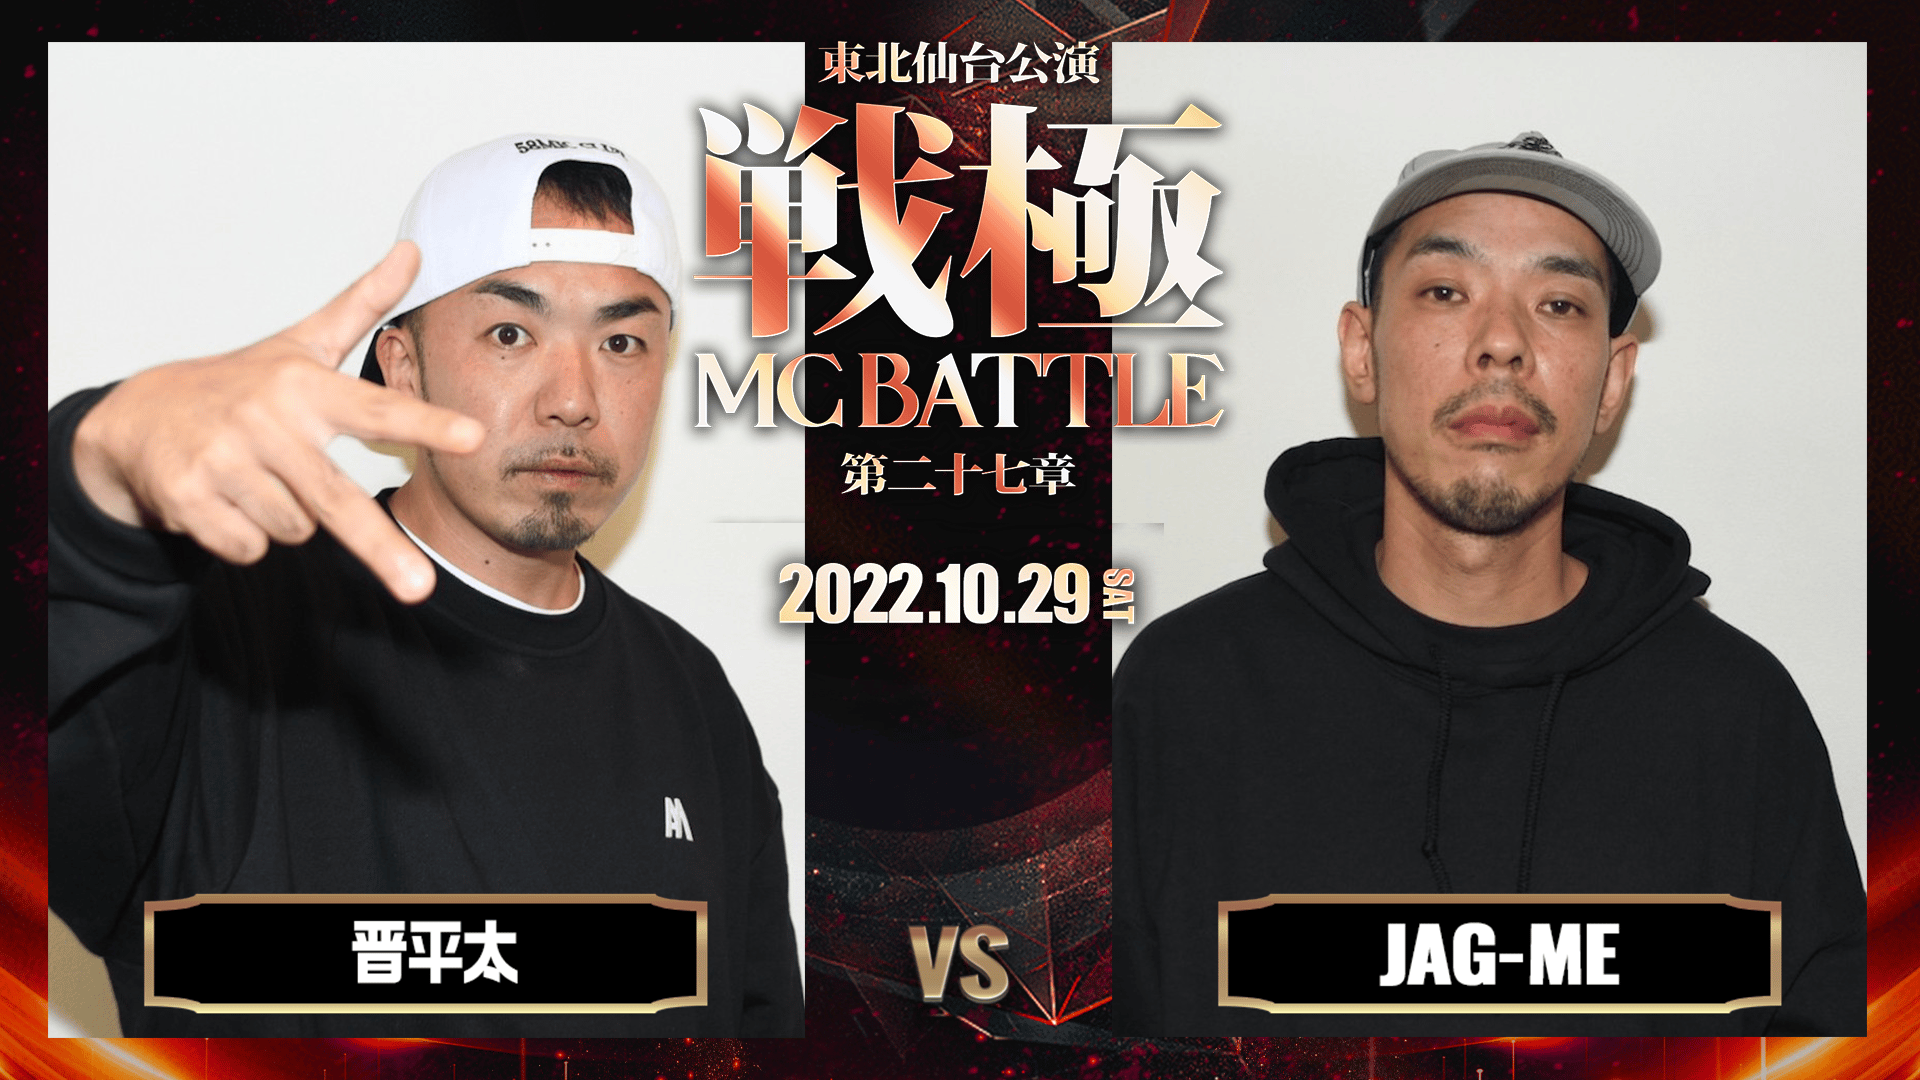 戦極MCBATTLE - 晋平太 vs JAG-ME